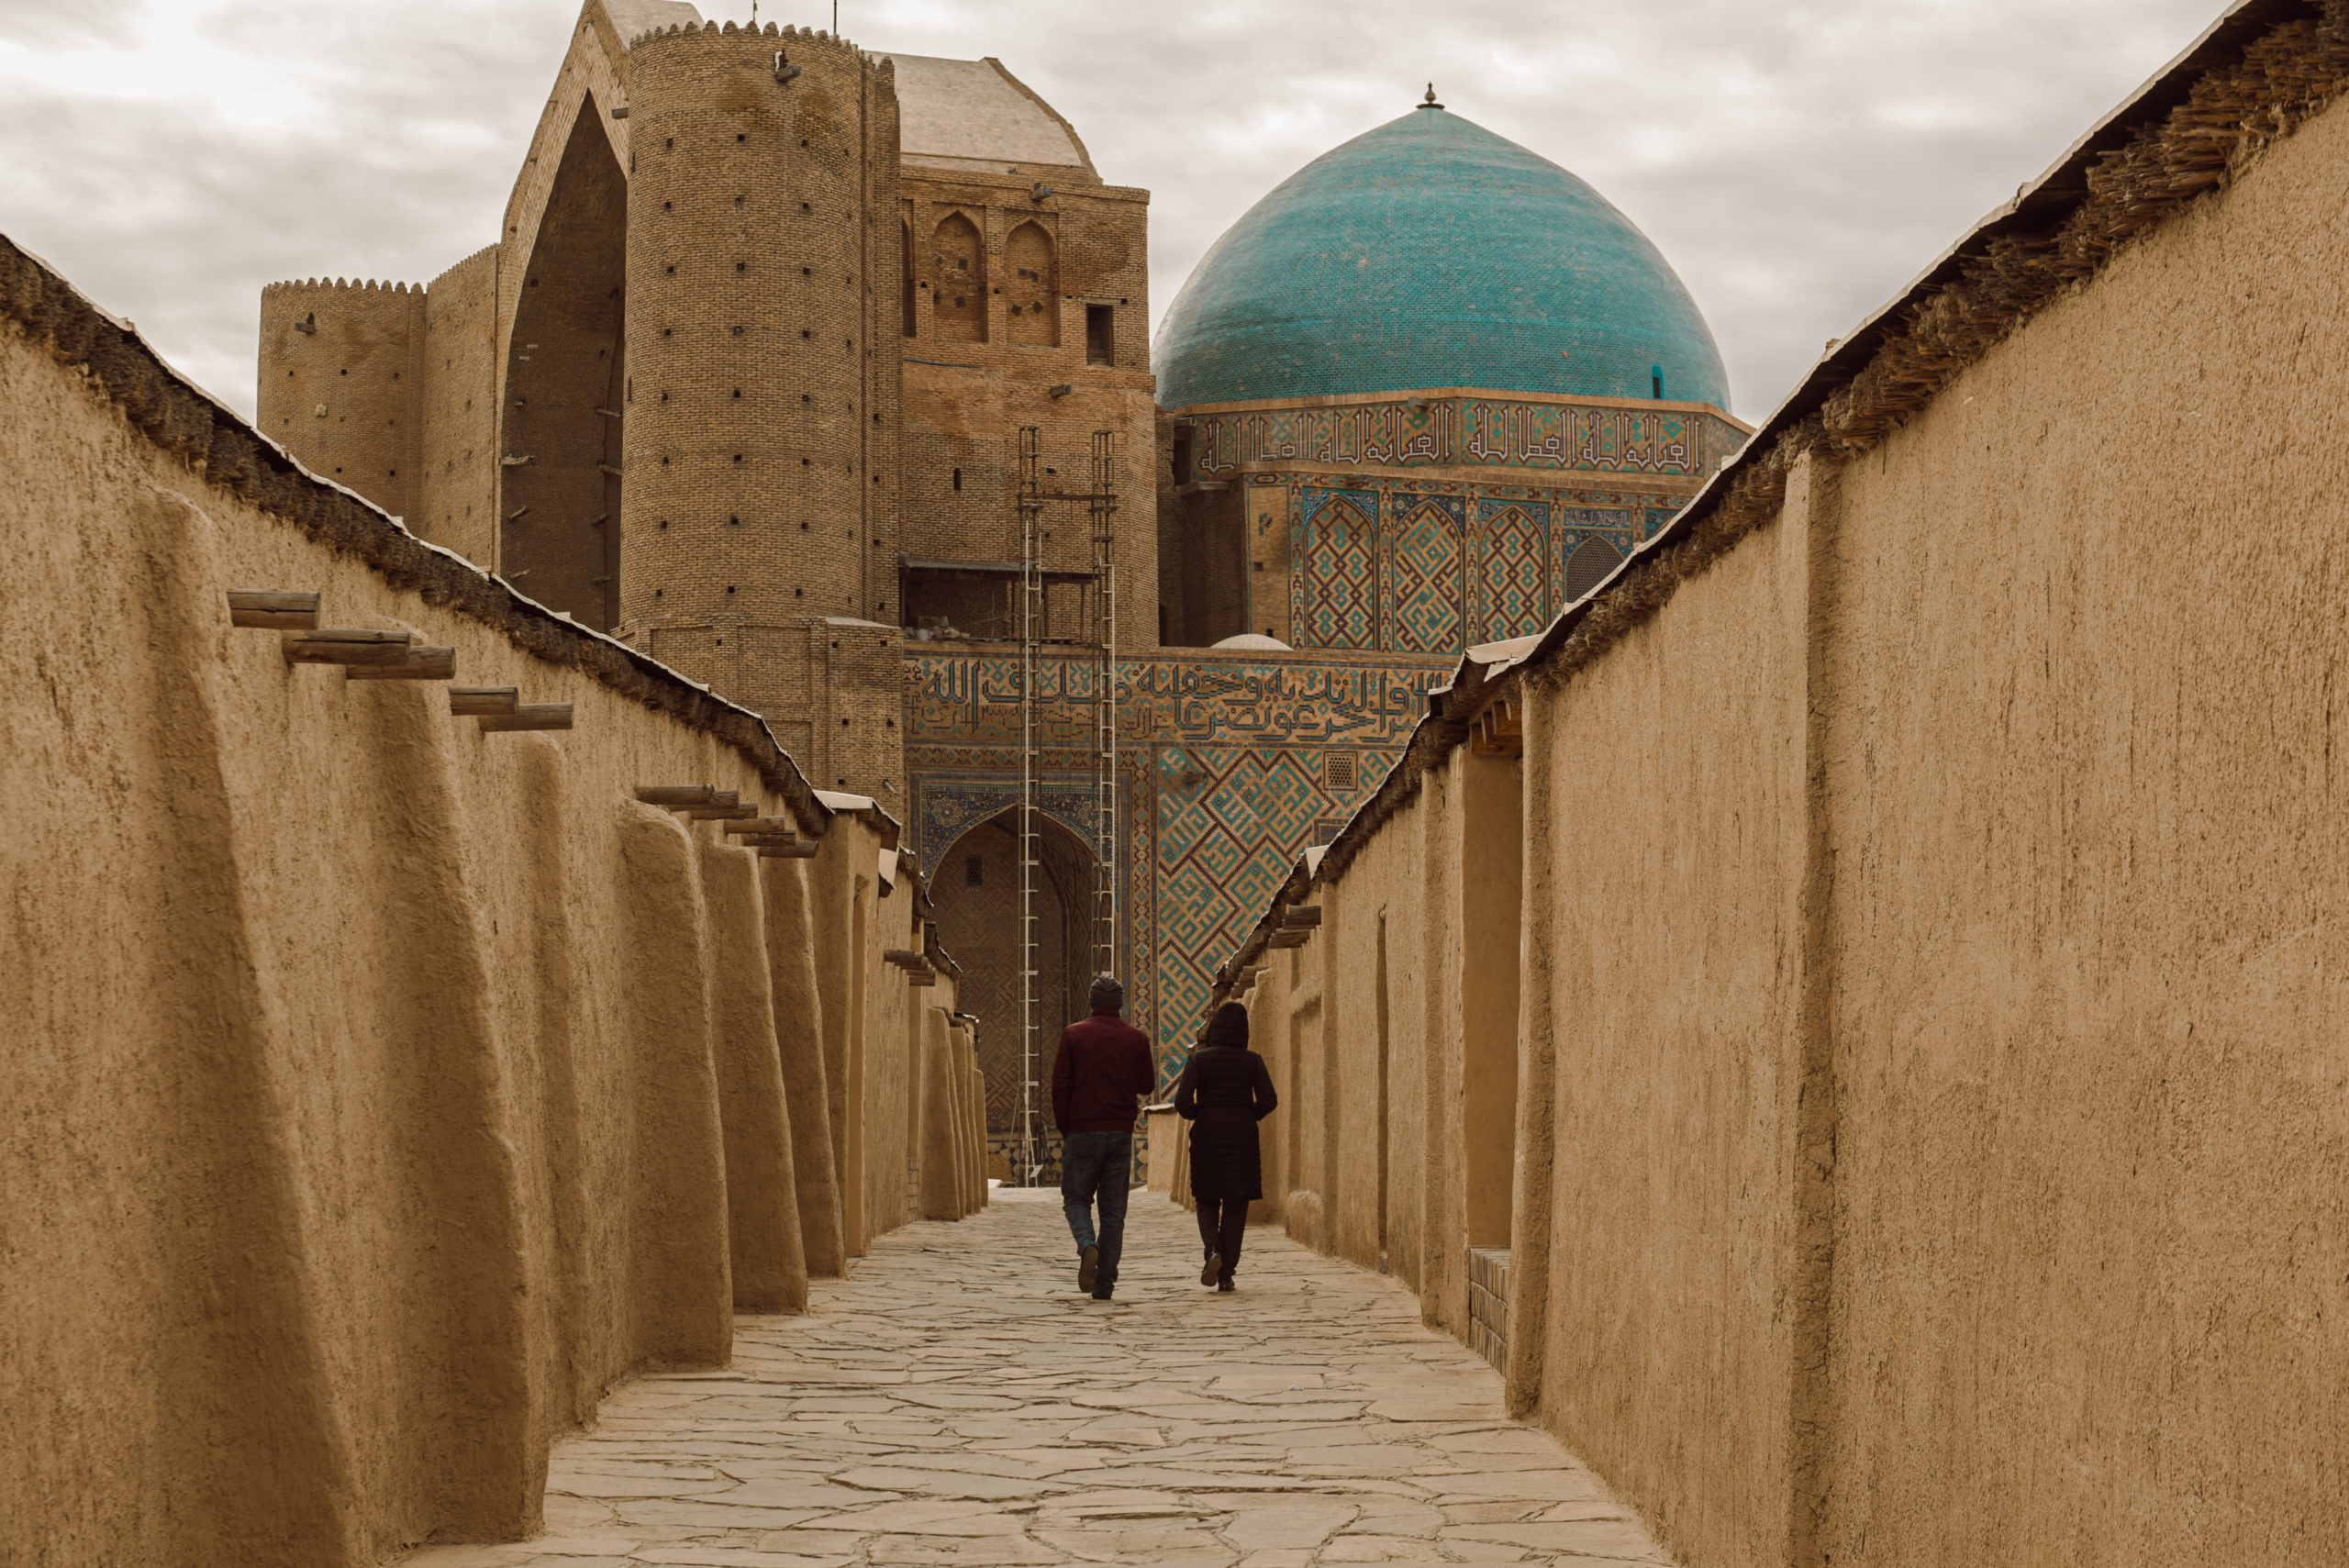 kazakhstan vs uzbekistan travel